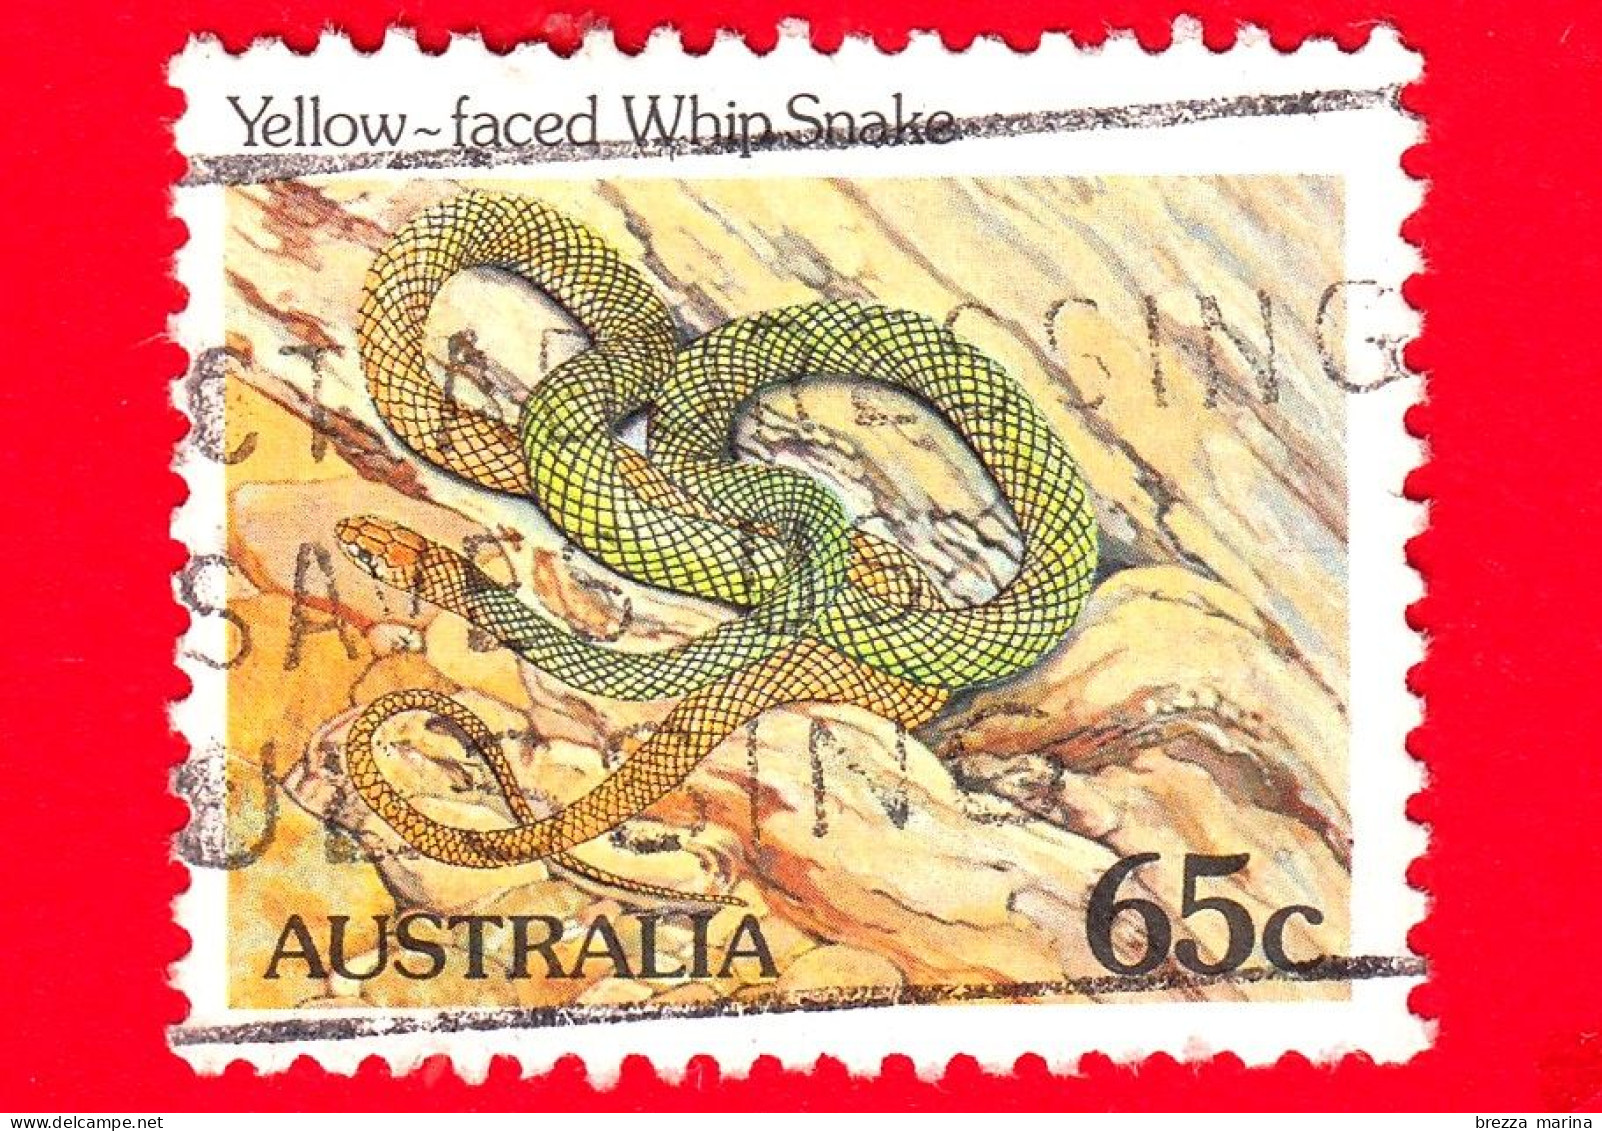 AUSTRALIA - Usato - 1984 - Rettili - Serpenti - Yellow-faced Whip Snake  - 65 - Gebraucht